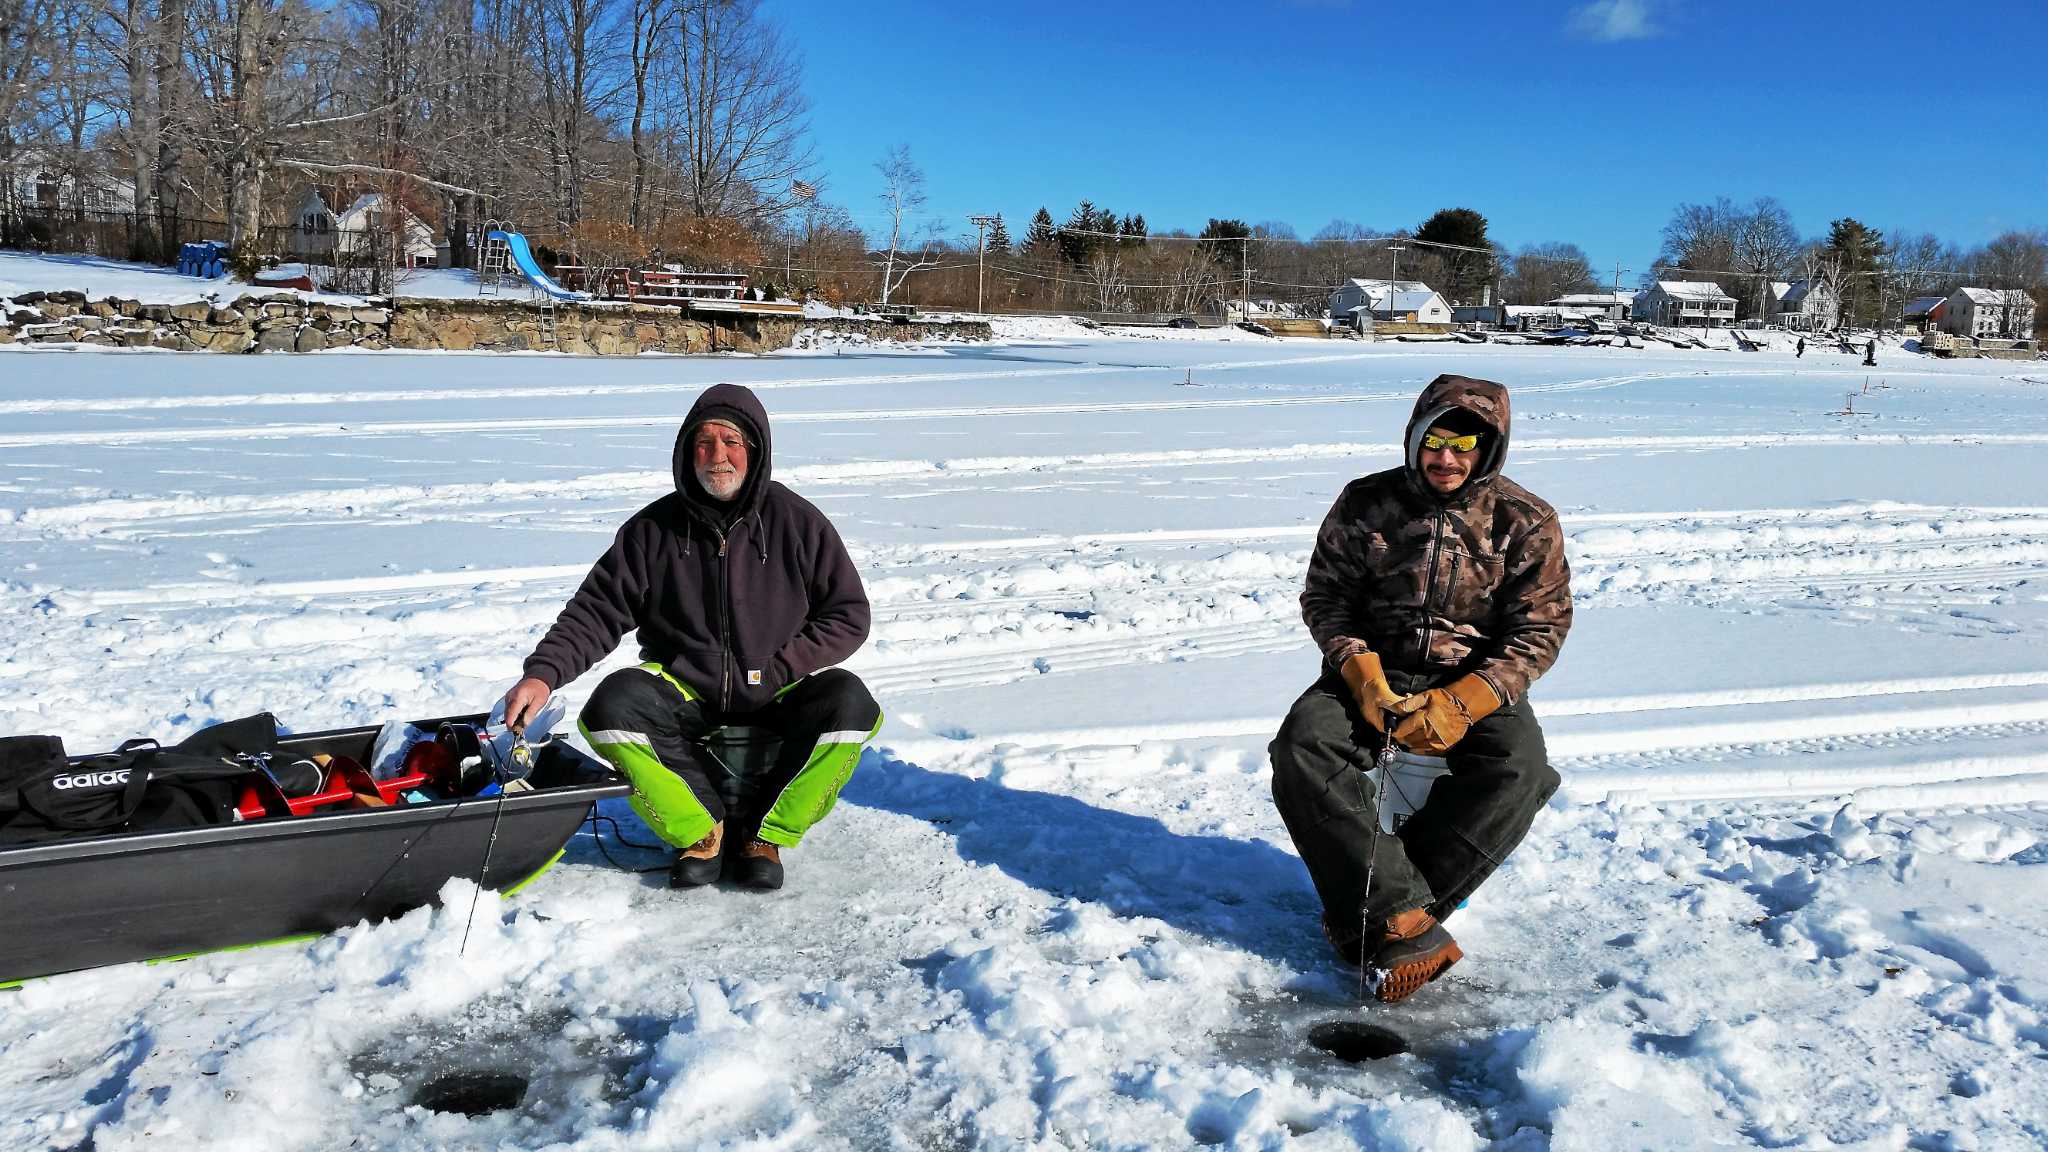 Ice fishing derby raises 4660 for veterans groups